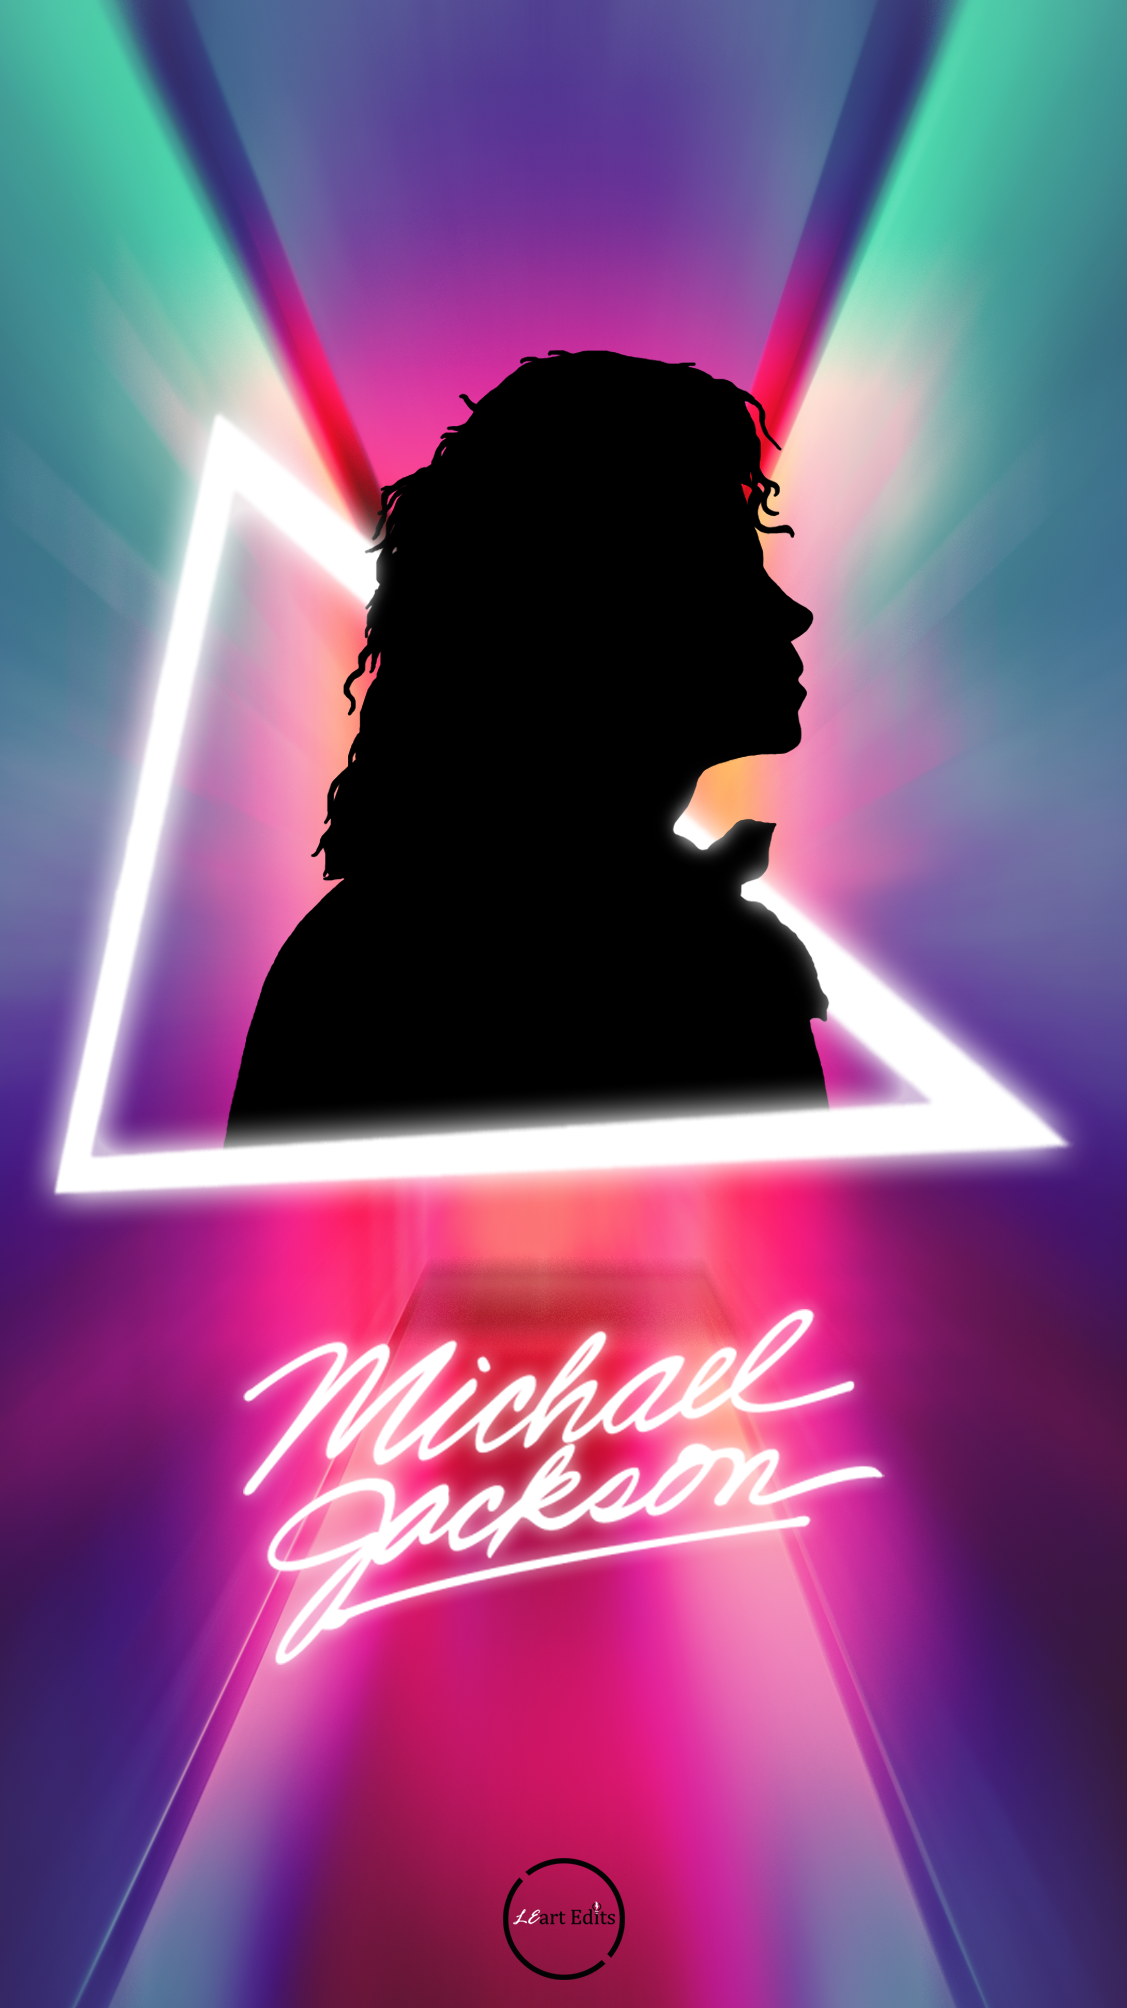 Michael Jackson. Michael jackson wallpaper, Michael jackson drawings, Michael jackson art